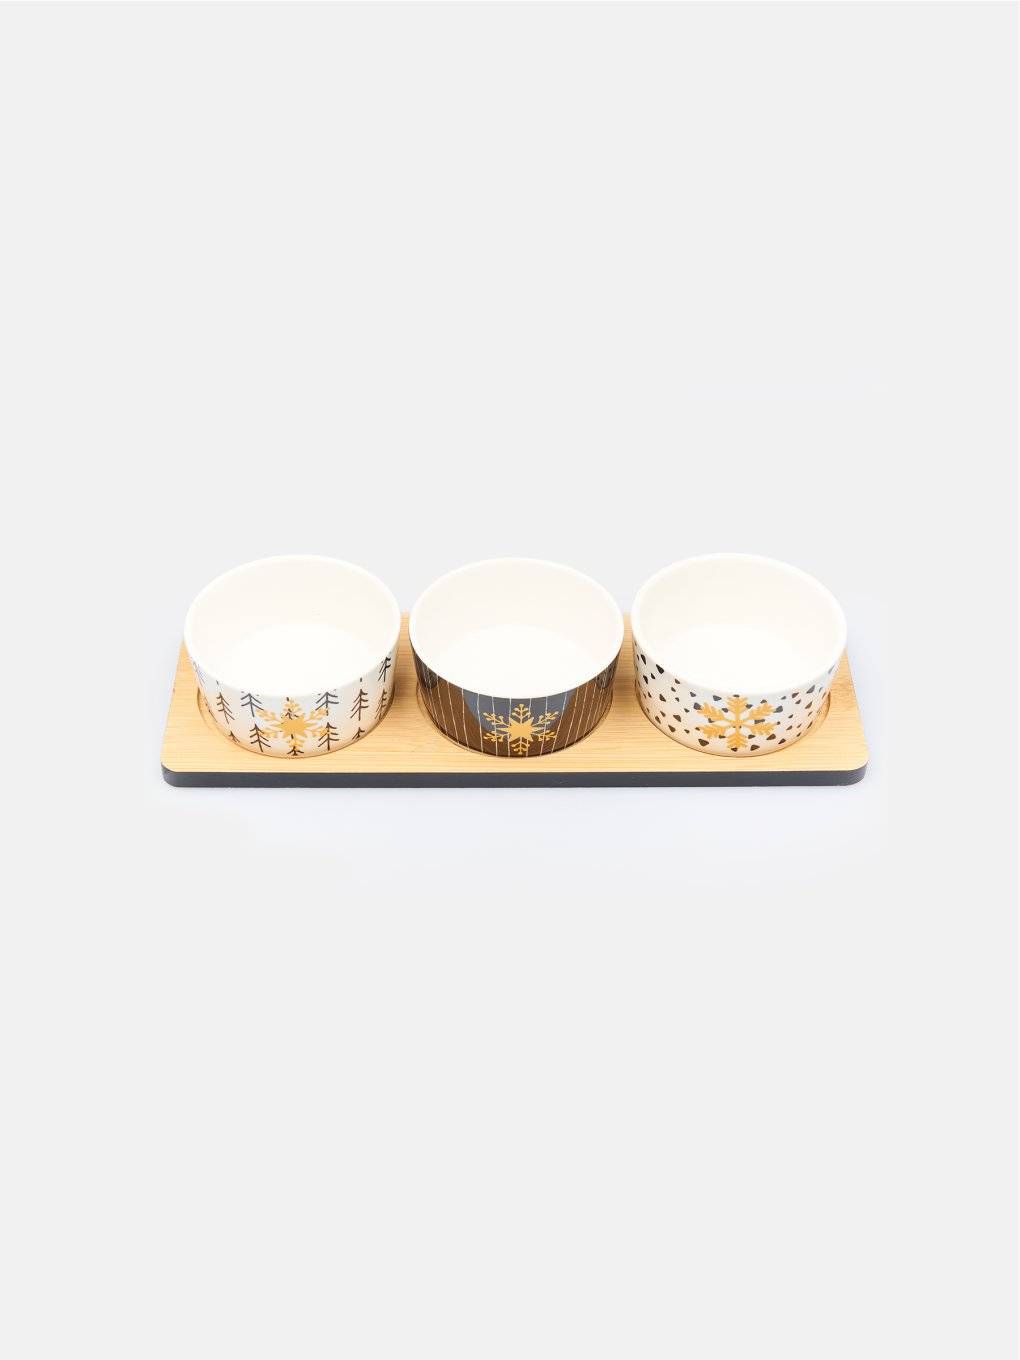 Set of 3 bowls